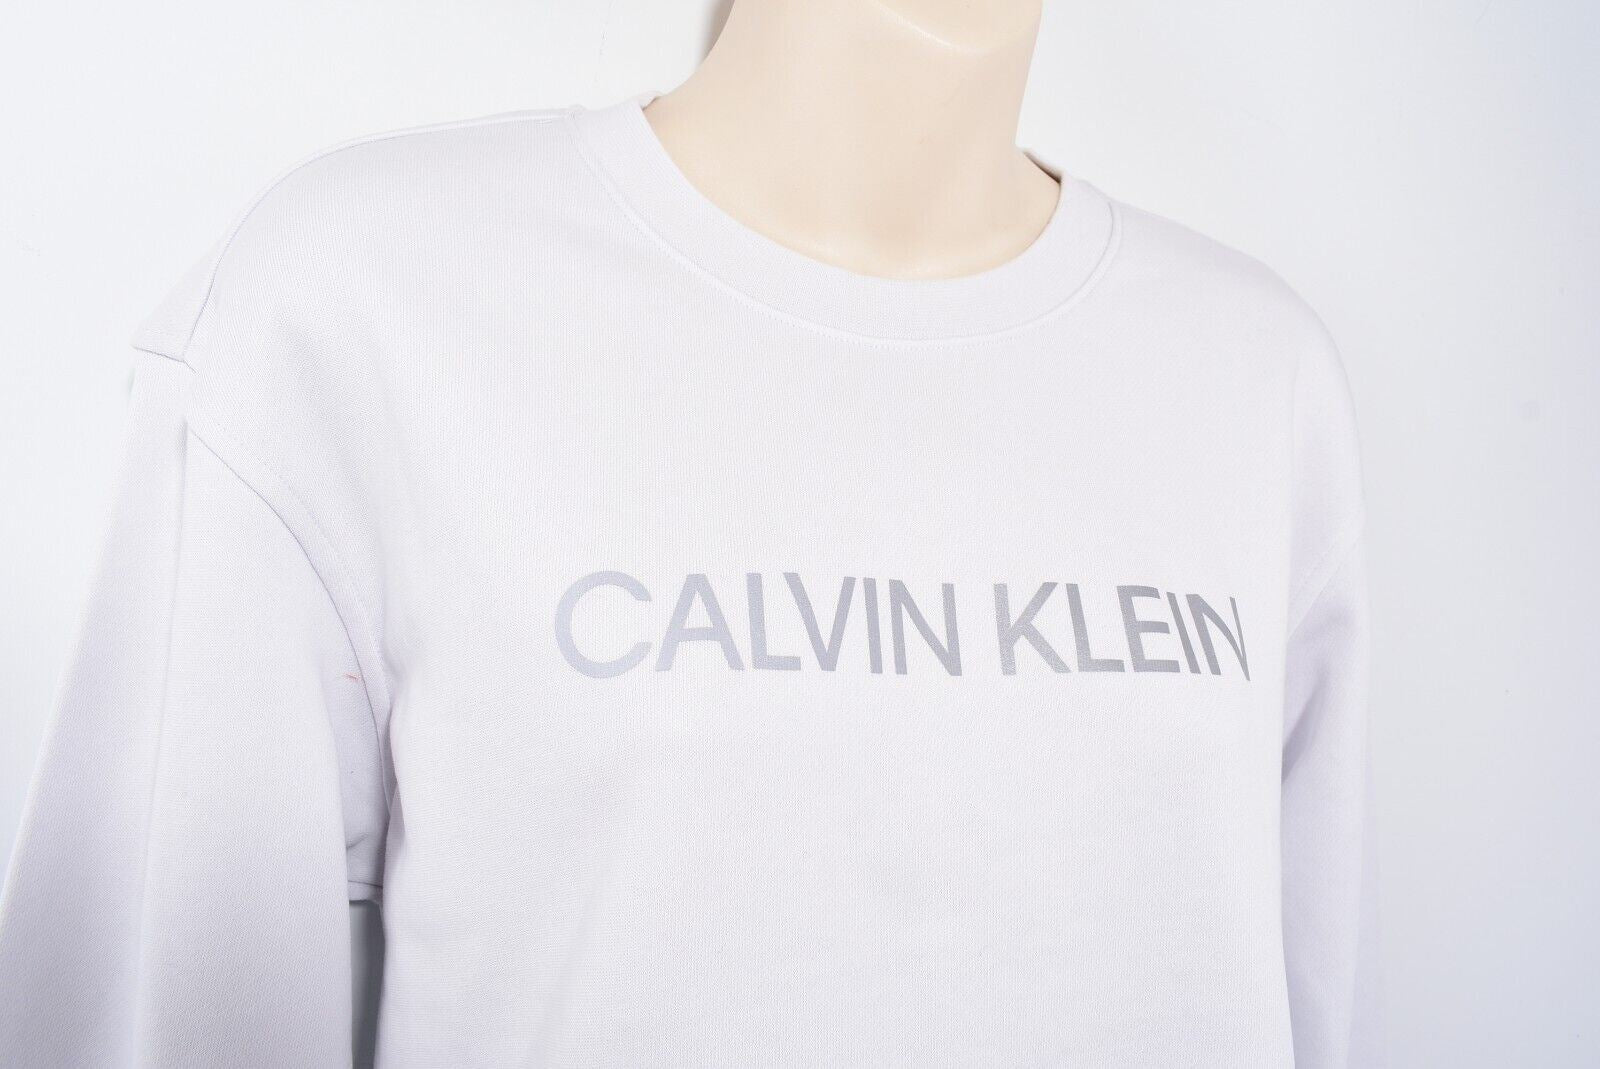 CALVIN KLEIN Womens Girls Cropped Sweatshirt, Nimbus Cloud (grey), size S /UK 10